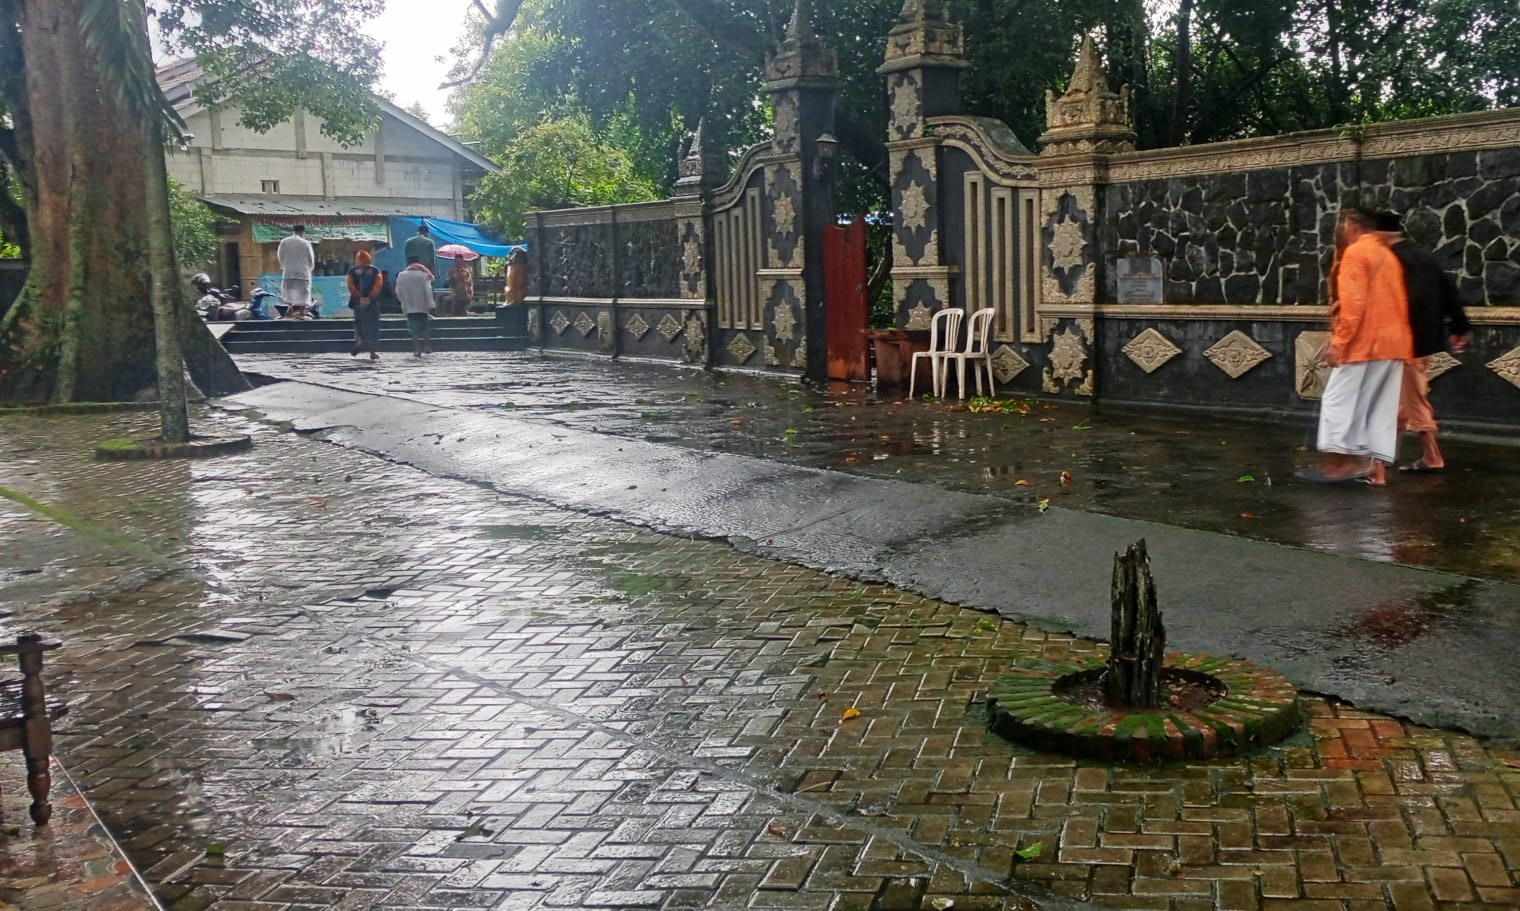 Gerbang makam Pangeran Sukowati Desa Pengkol, Kecamatan Tanin, Sragen. (Masrikin/kabarterdepan.com) 